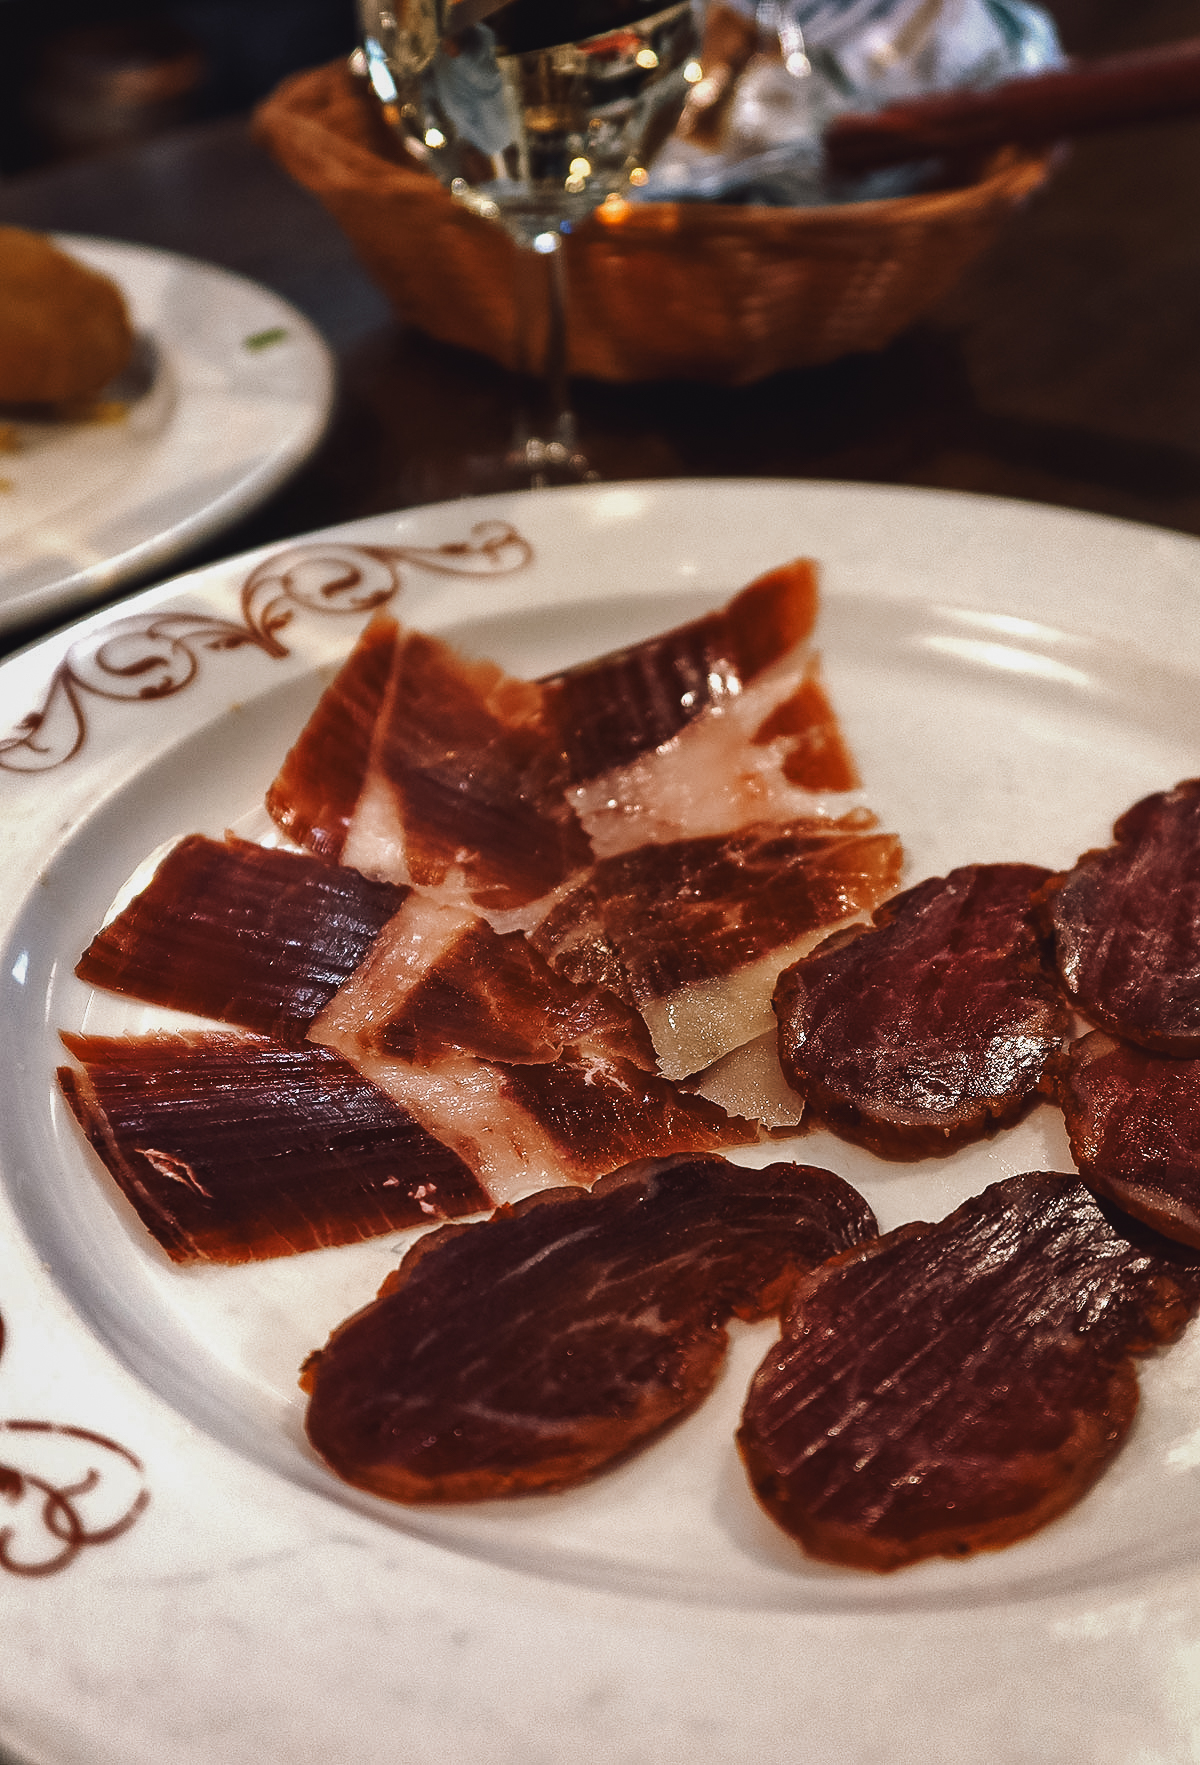 Iberian ham at a restaurant in Seville